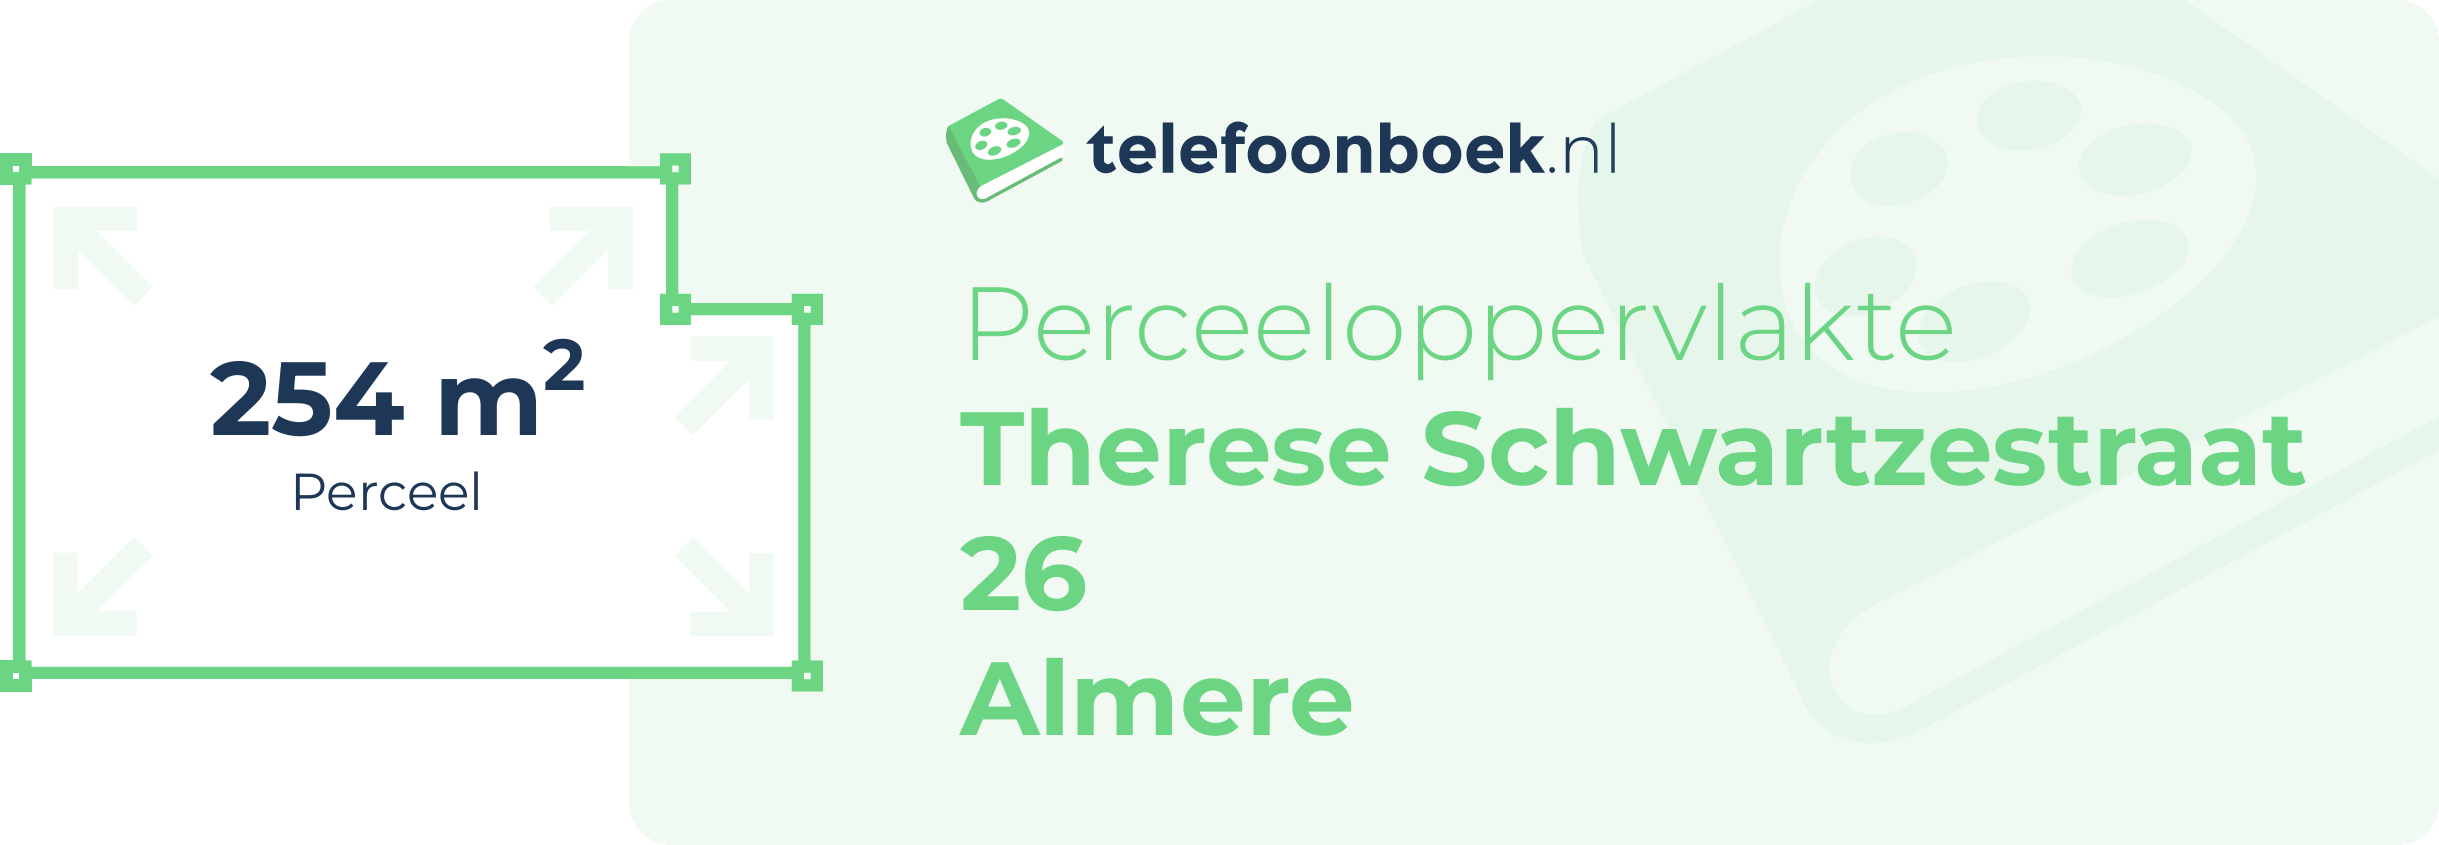 Perceeloppervlakte Therese Schwartzestraat 26 Almere